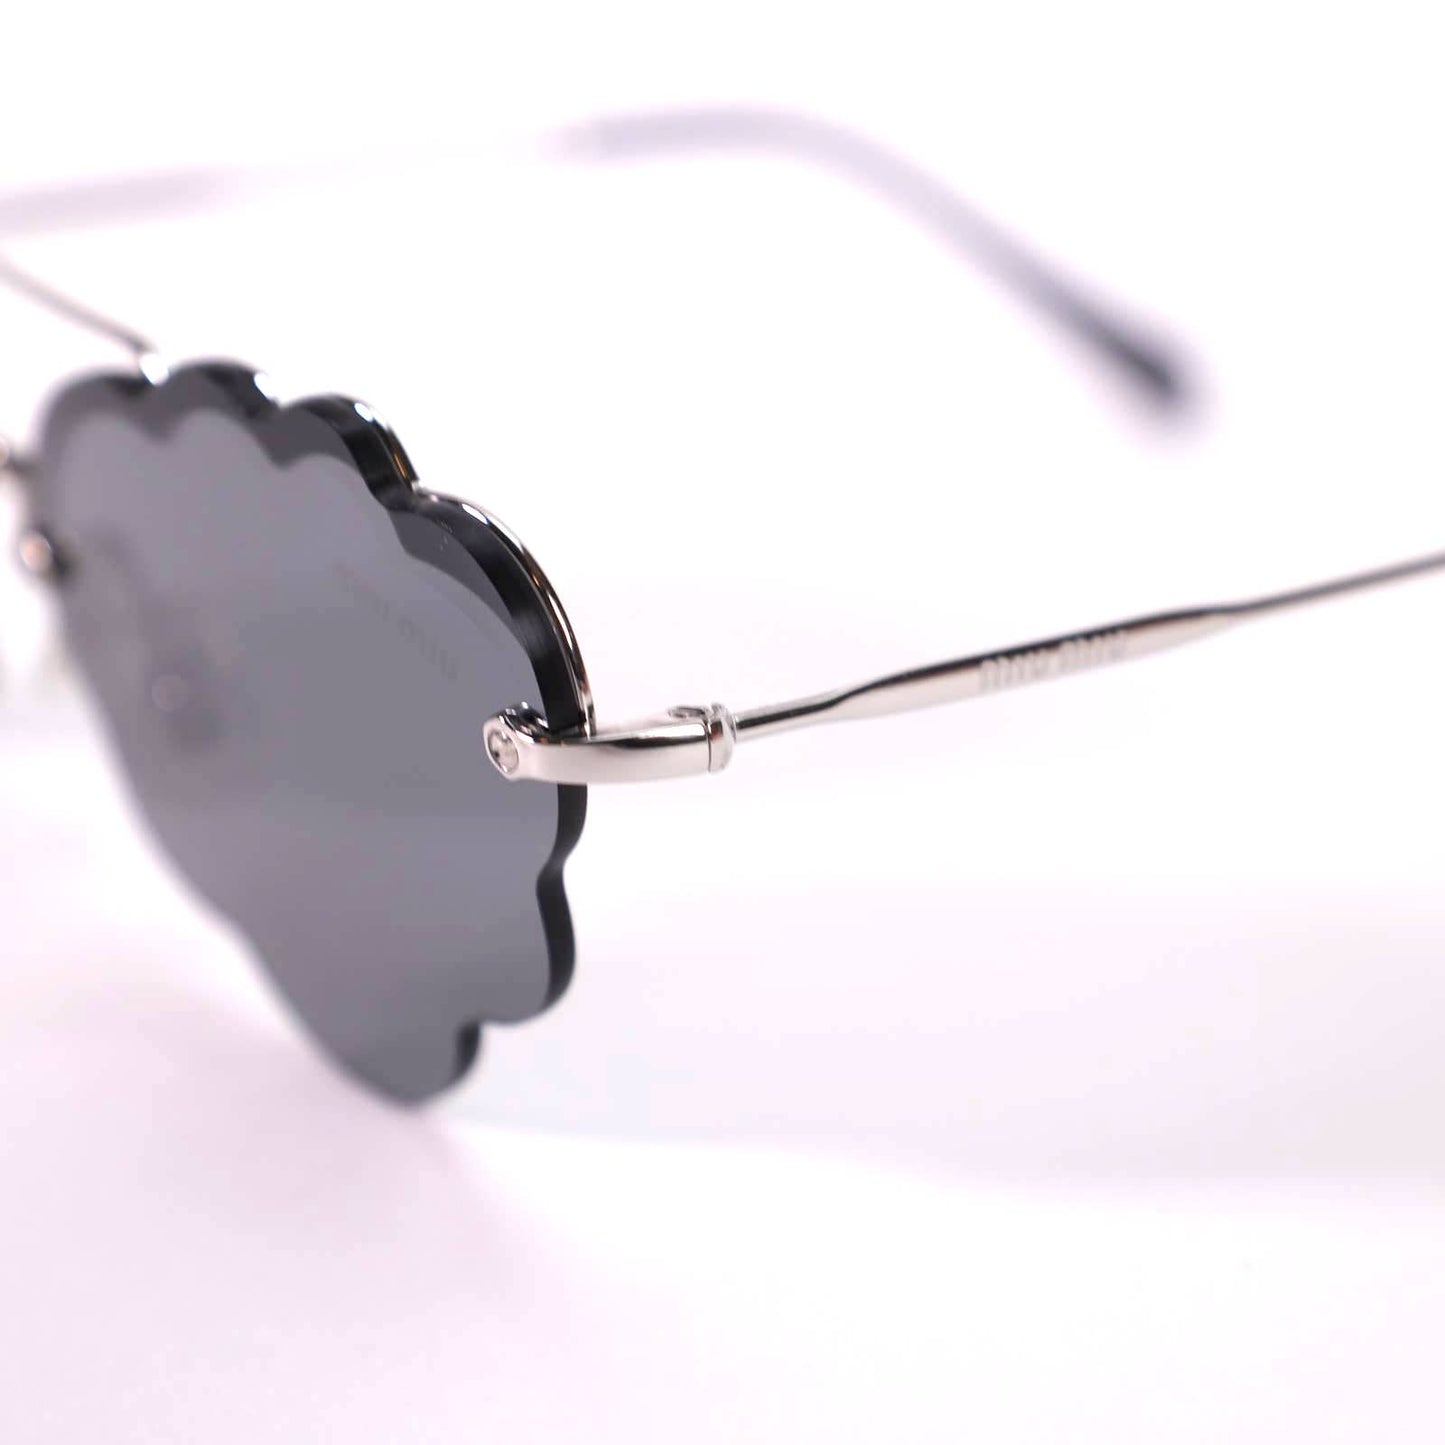 Miu Miu 58mm Cloud Sunglasses - Silver/Dark Grey Flash